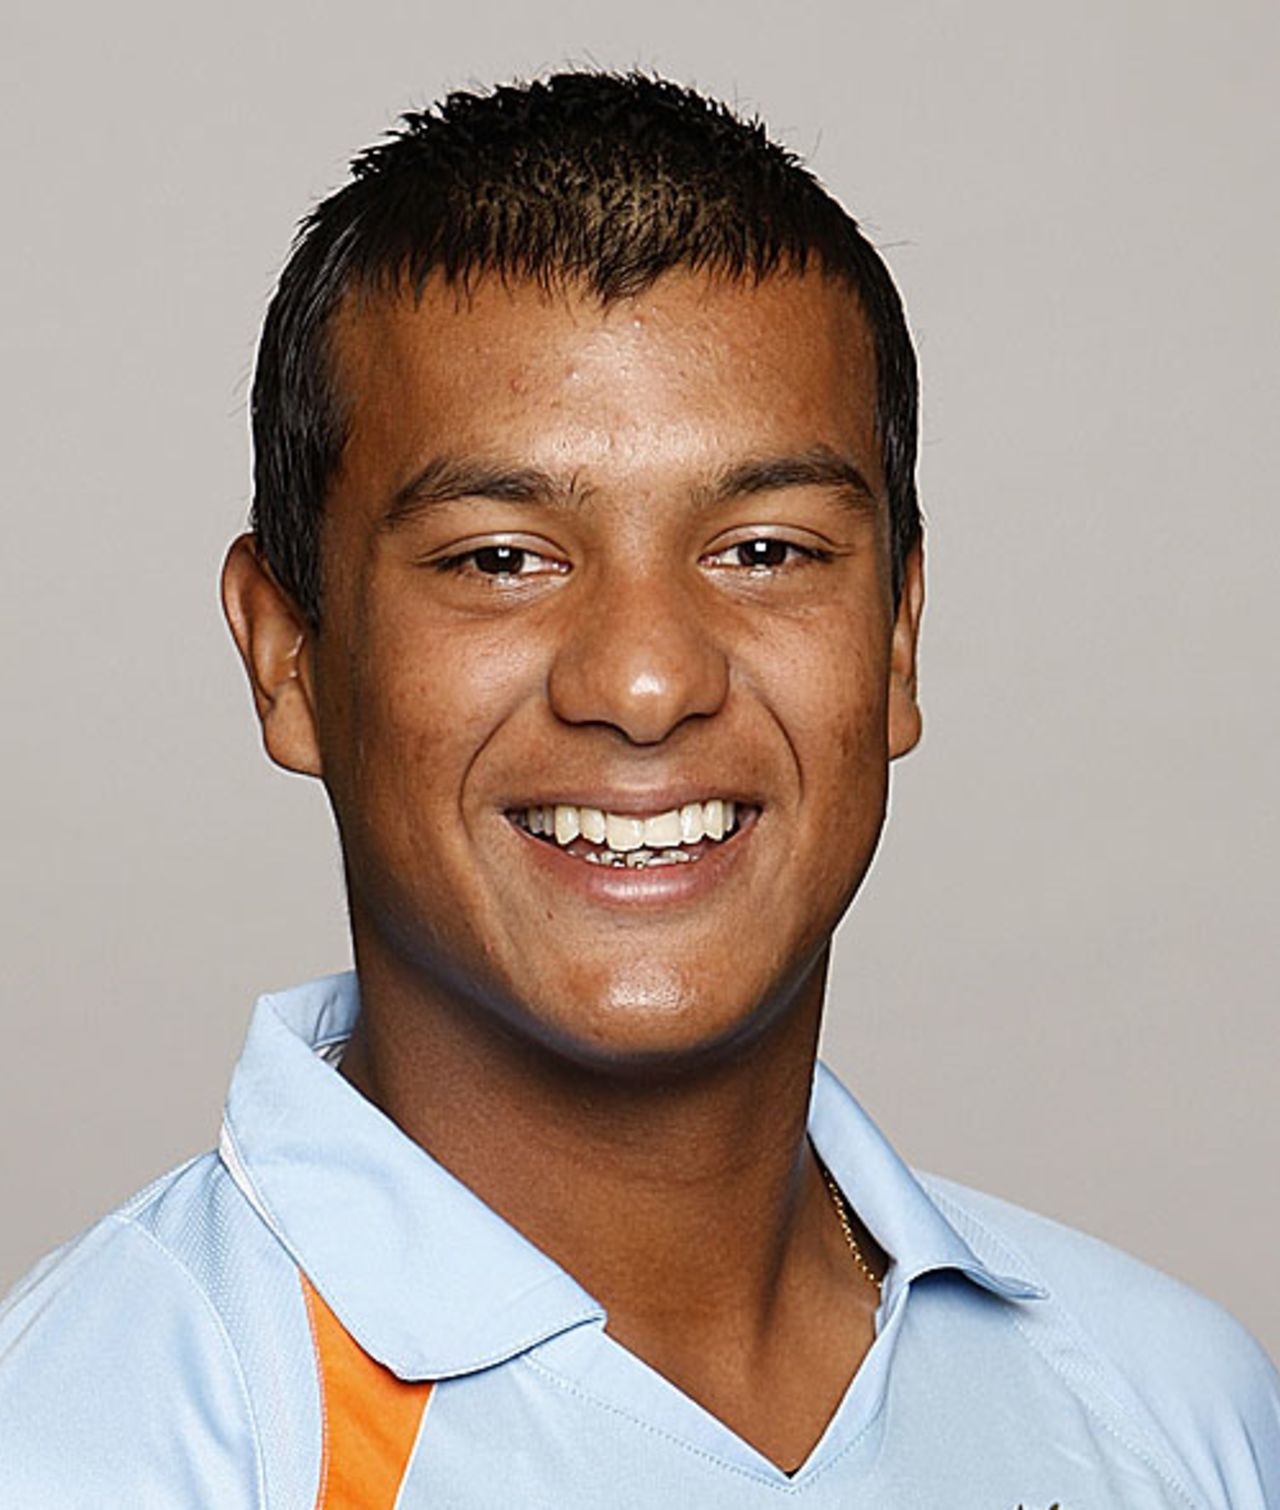 Mayank Agarwal, player portrait